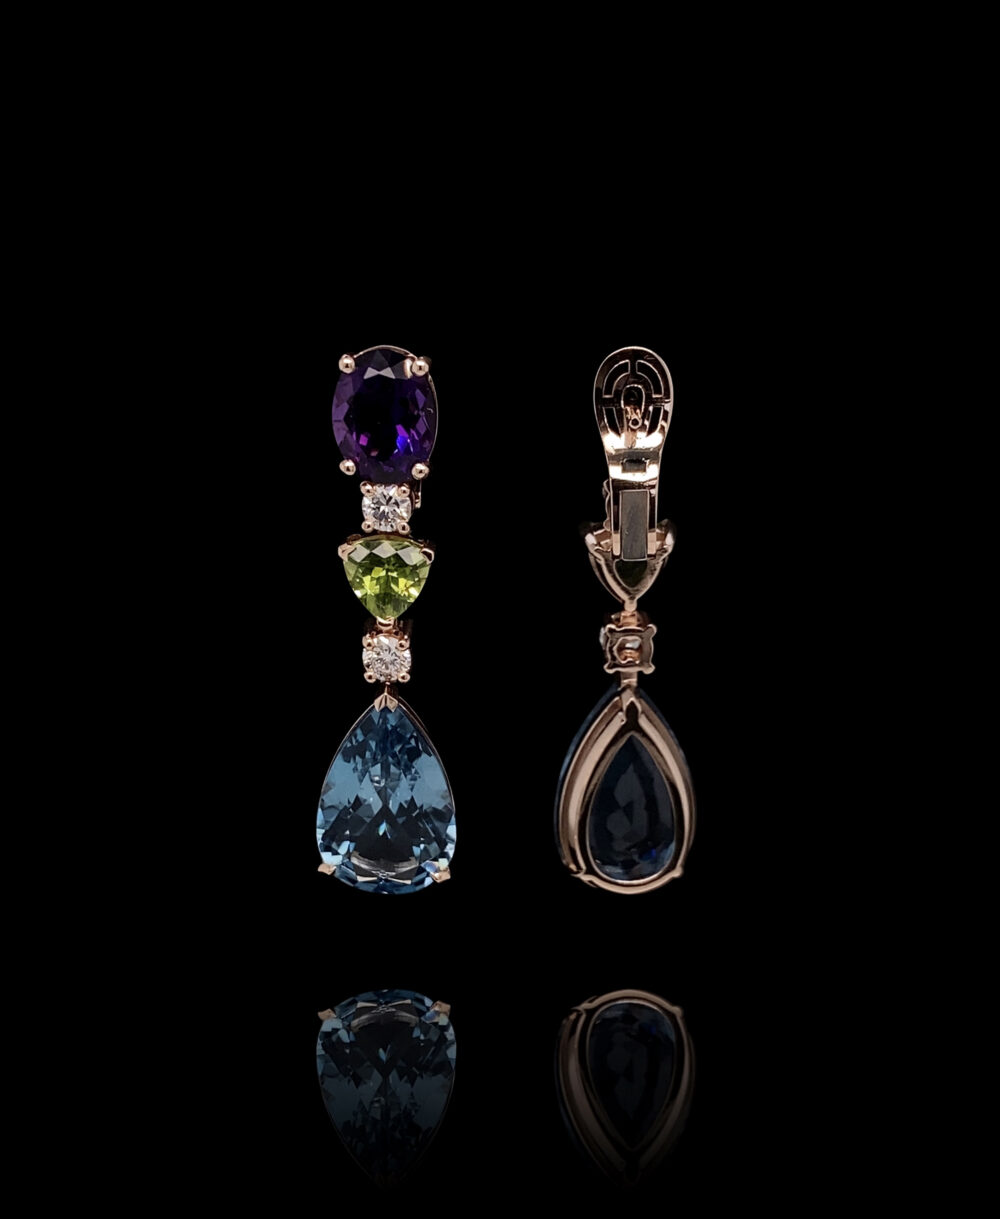 Rosegold earrings with oval shape amethyst, trilliant cut peridot, pear shape london blue topaz and brilliant cut diamonds